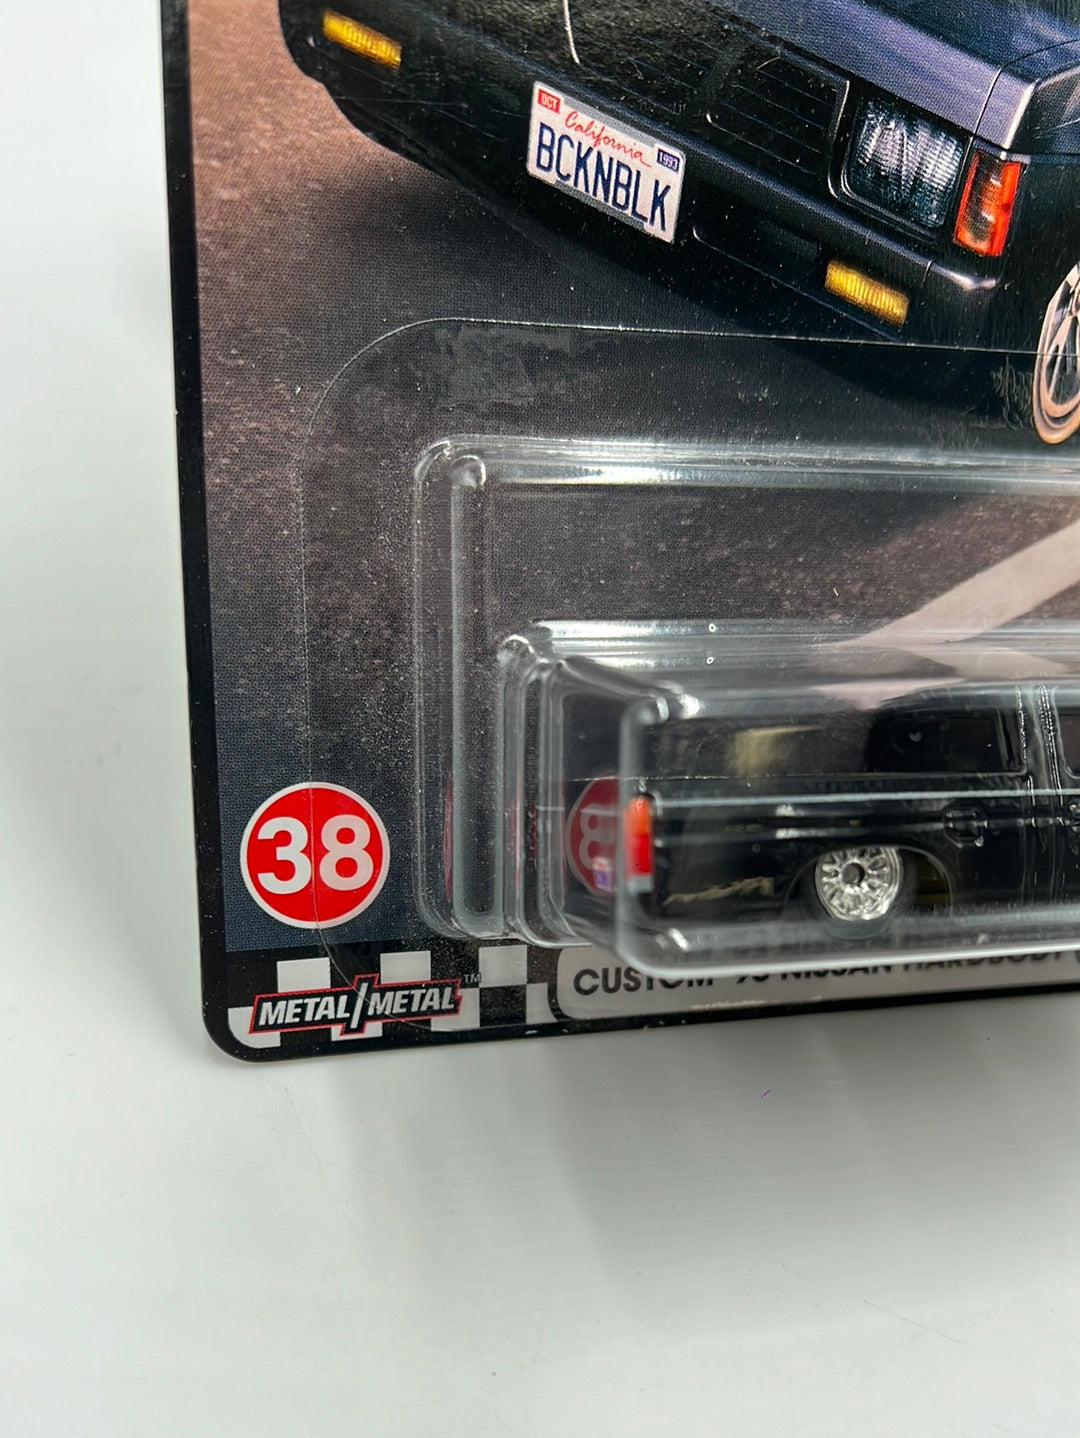 Hot Wheels Premium Boulevard #38 Custom ‘93 Nissan Hardbody (D21)